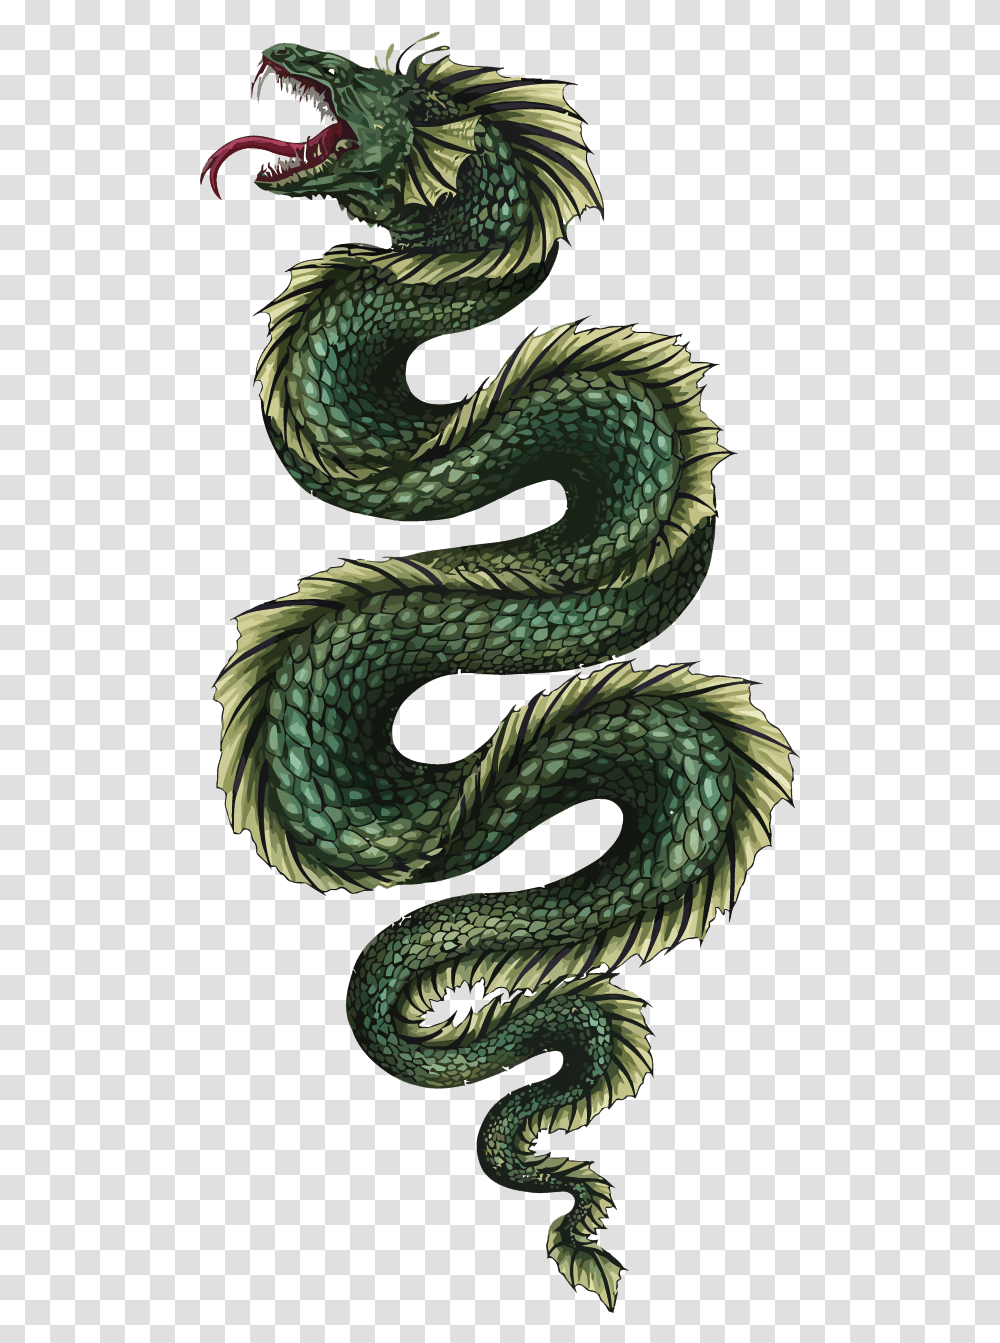 Download Midgard Serpent Chinese Dragon Vector Jxf6rmungandr Serpent Dragon, Snake, Reptile, Animal, Dinosaur Transparent Png